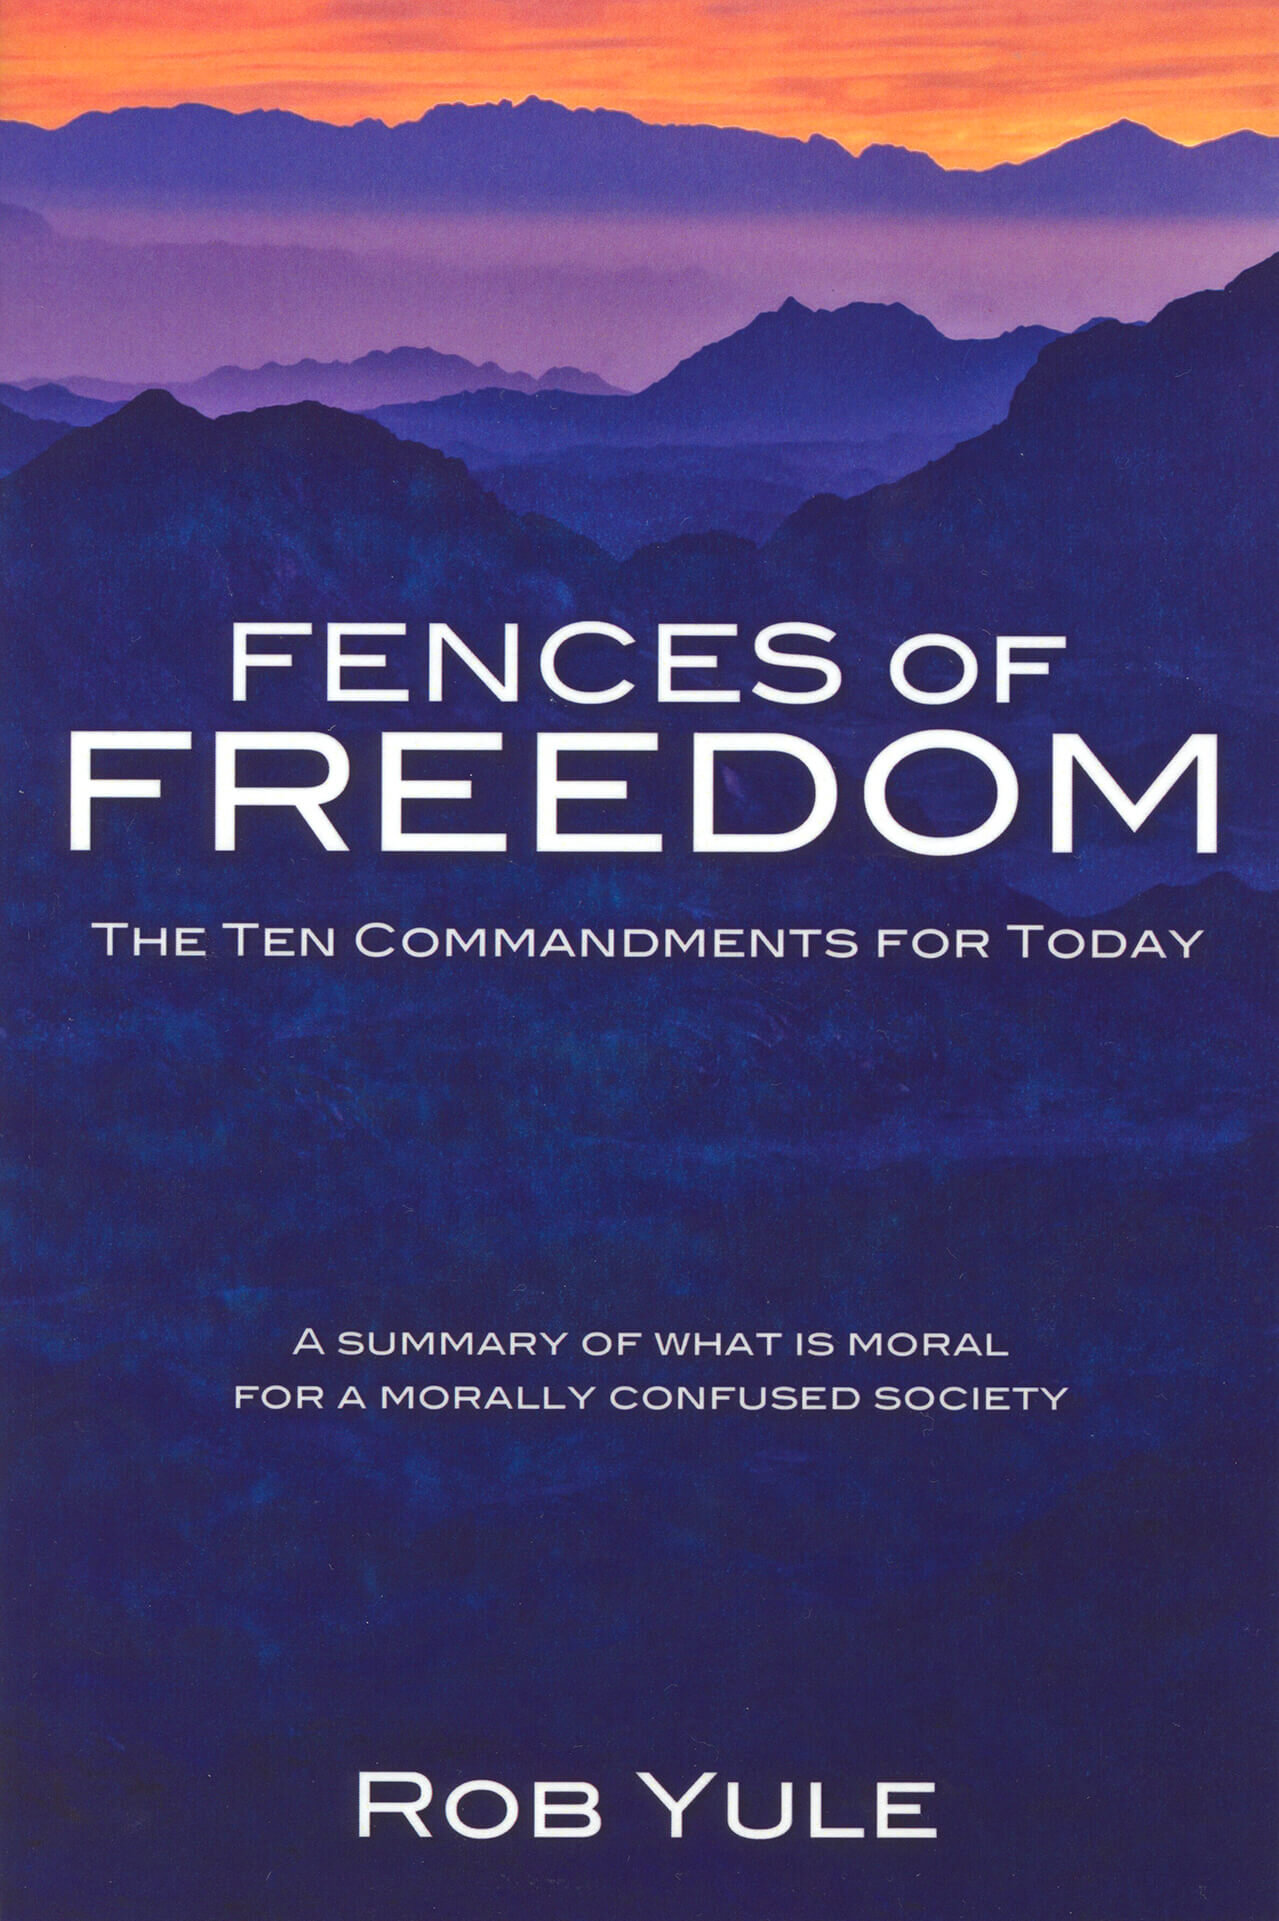 Fences-of-Freedom-Rob-Yule-front-cover-Xulon-Wild-Side-Publishing-Christian-Books-New-Zealand-NZ.jpg